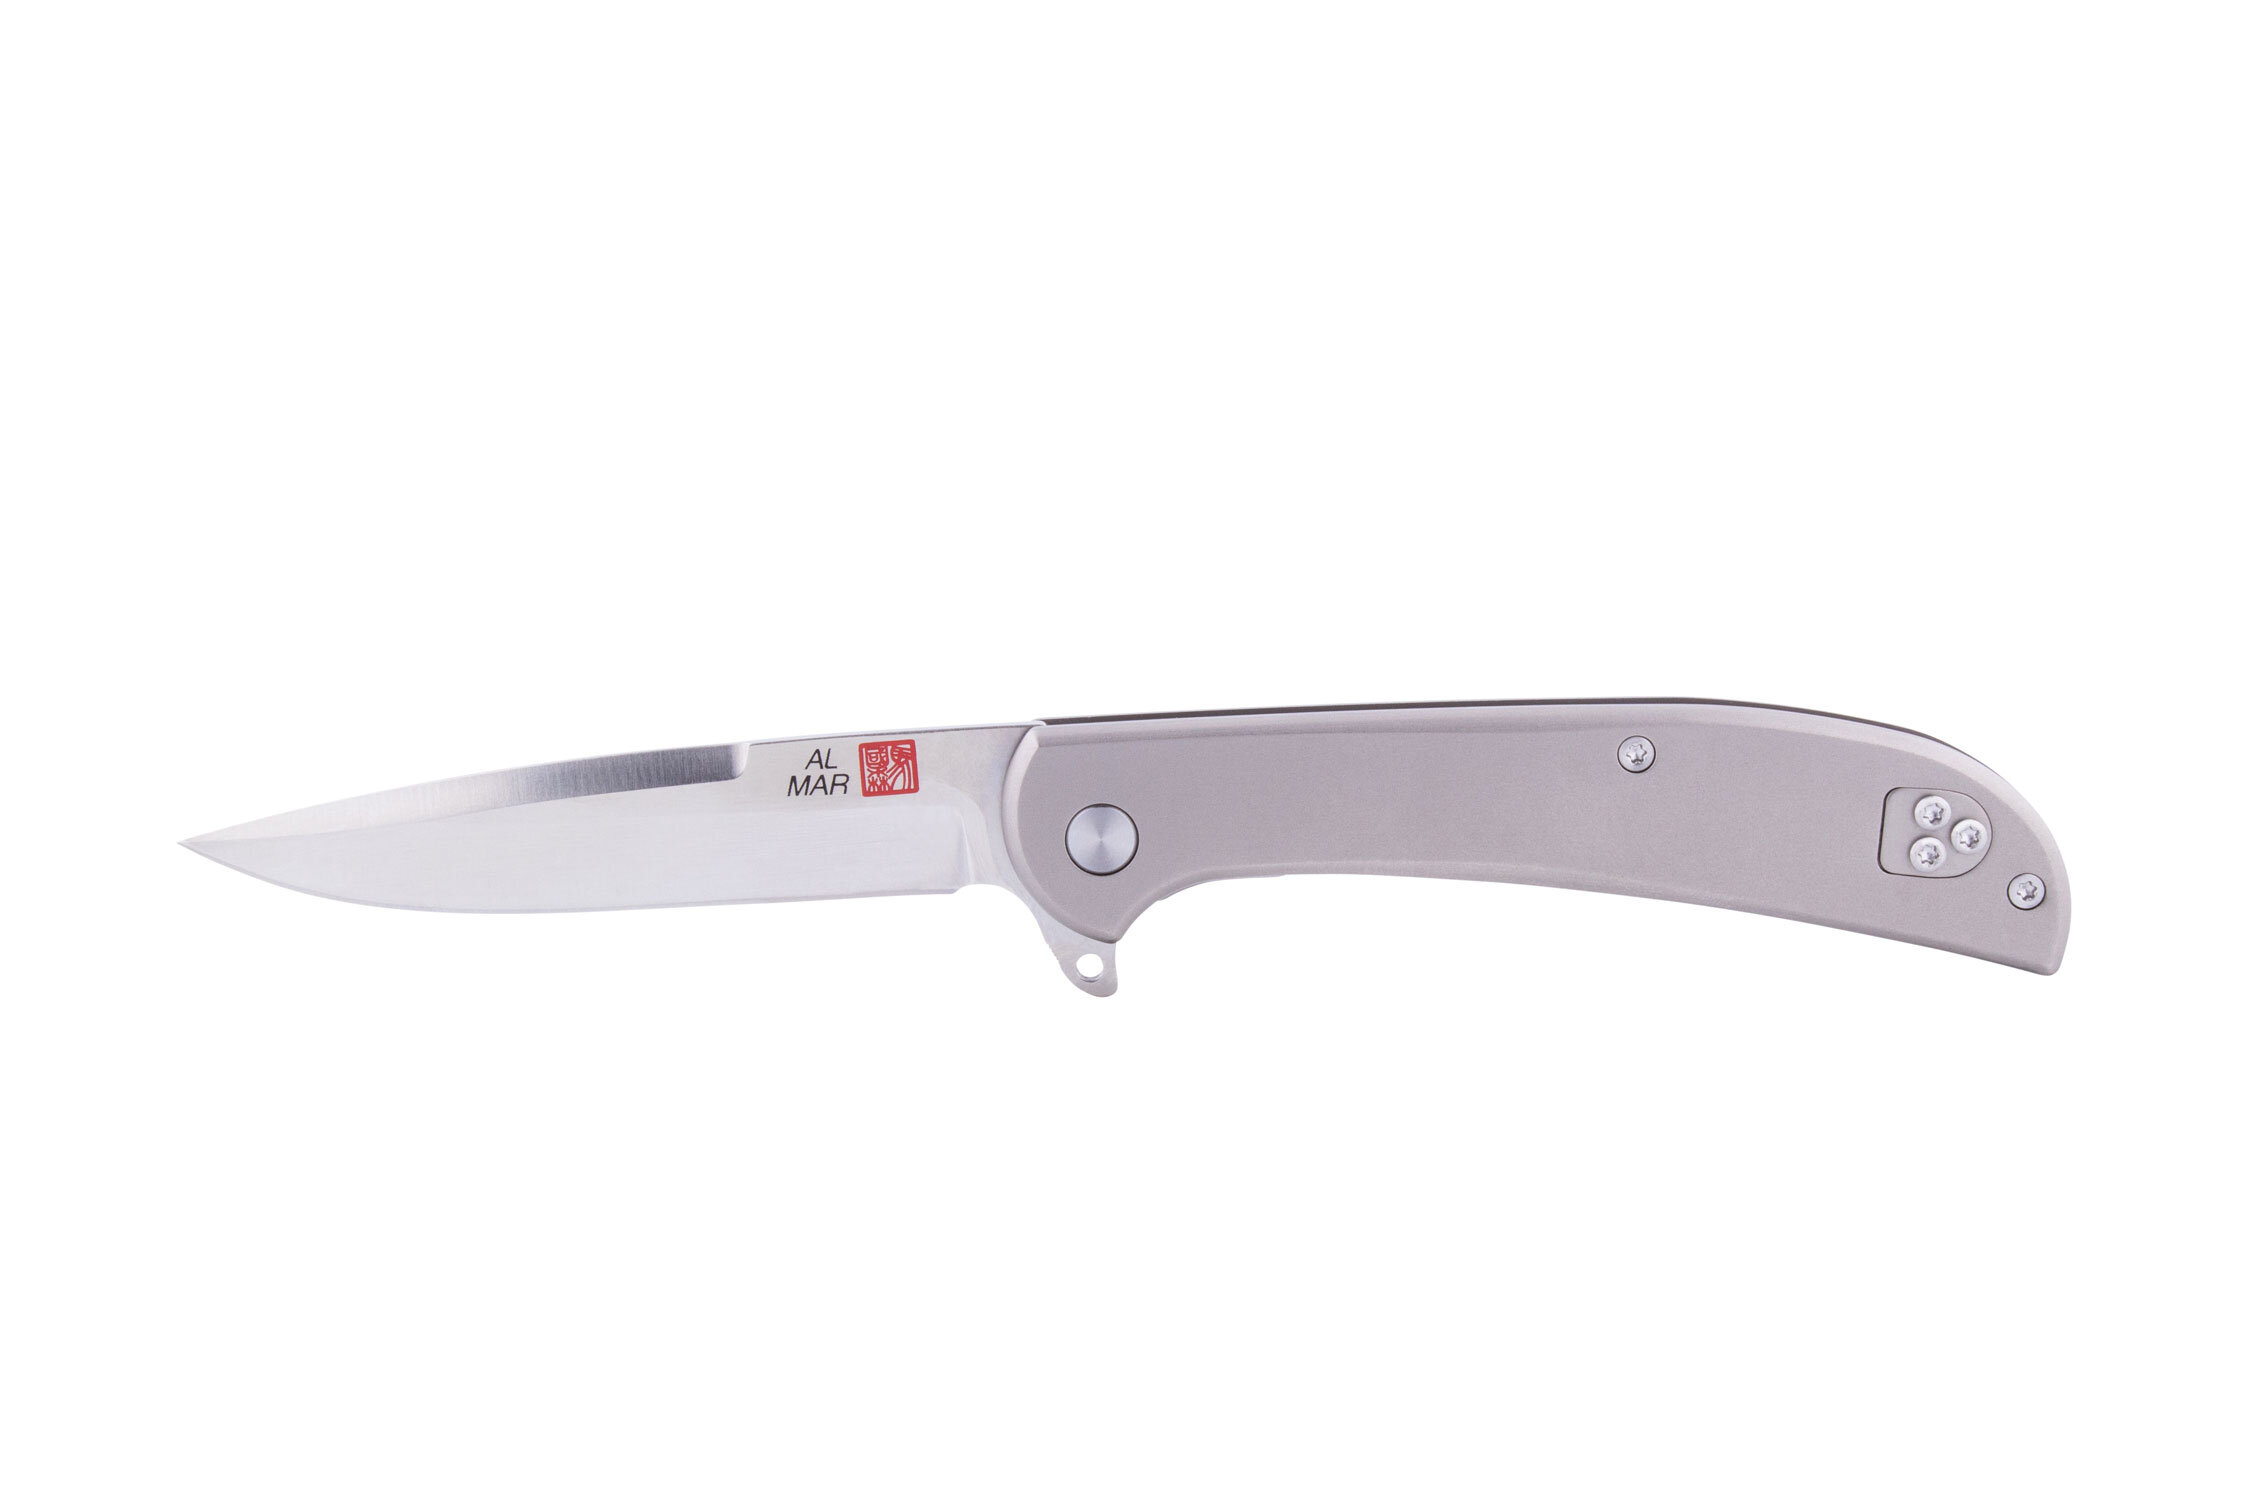 Titanium Al Mar Slimline Ultralight 5.0" Blade Titanium Handle Folding Knife 